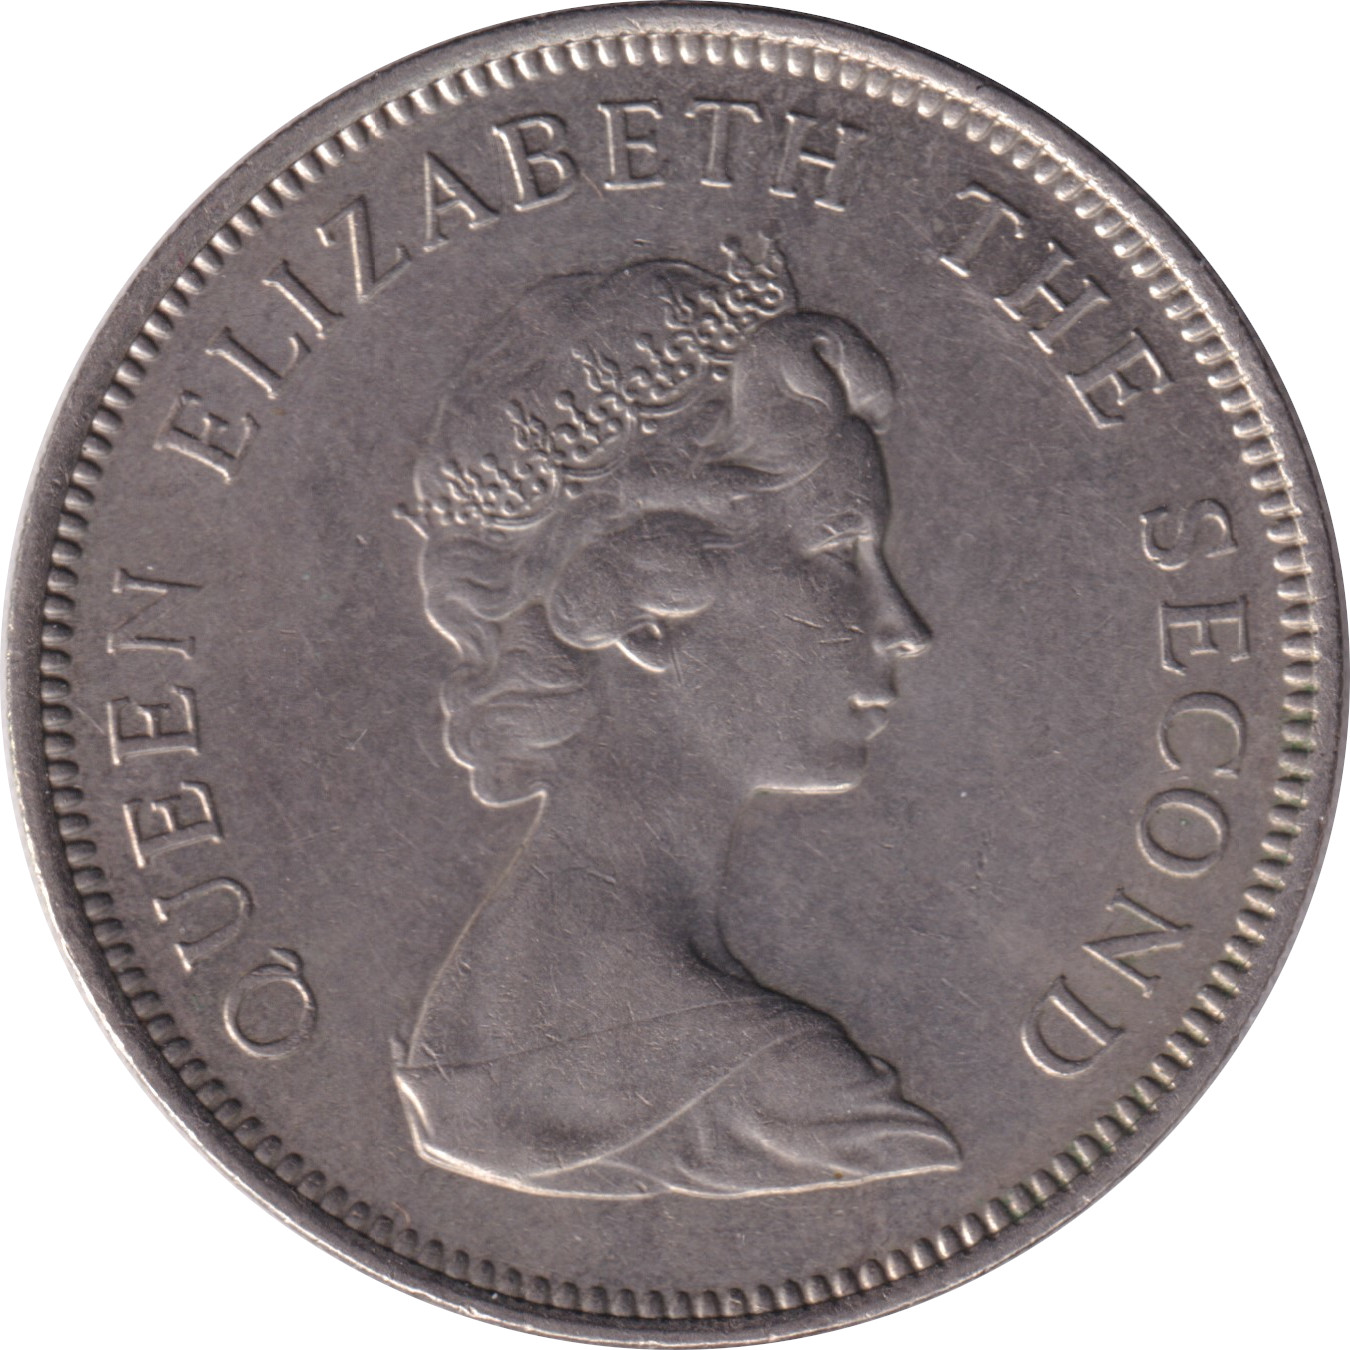 10 pence - Elizabeth II - Buste jeune - Lourde